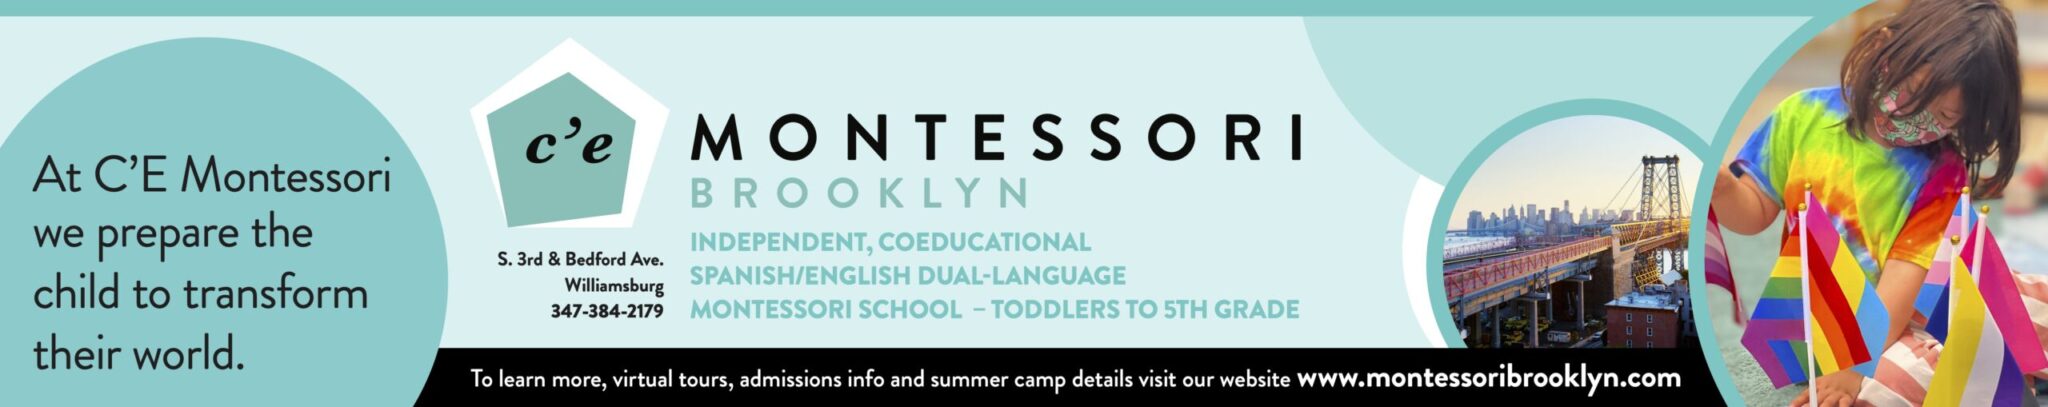 CE Montessori Brooklyn